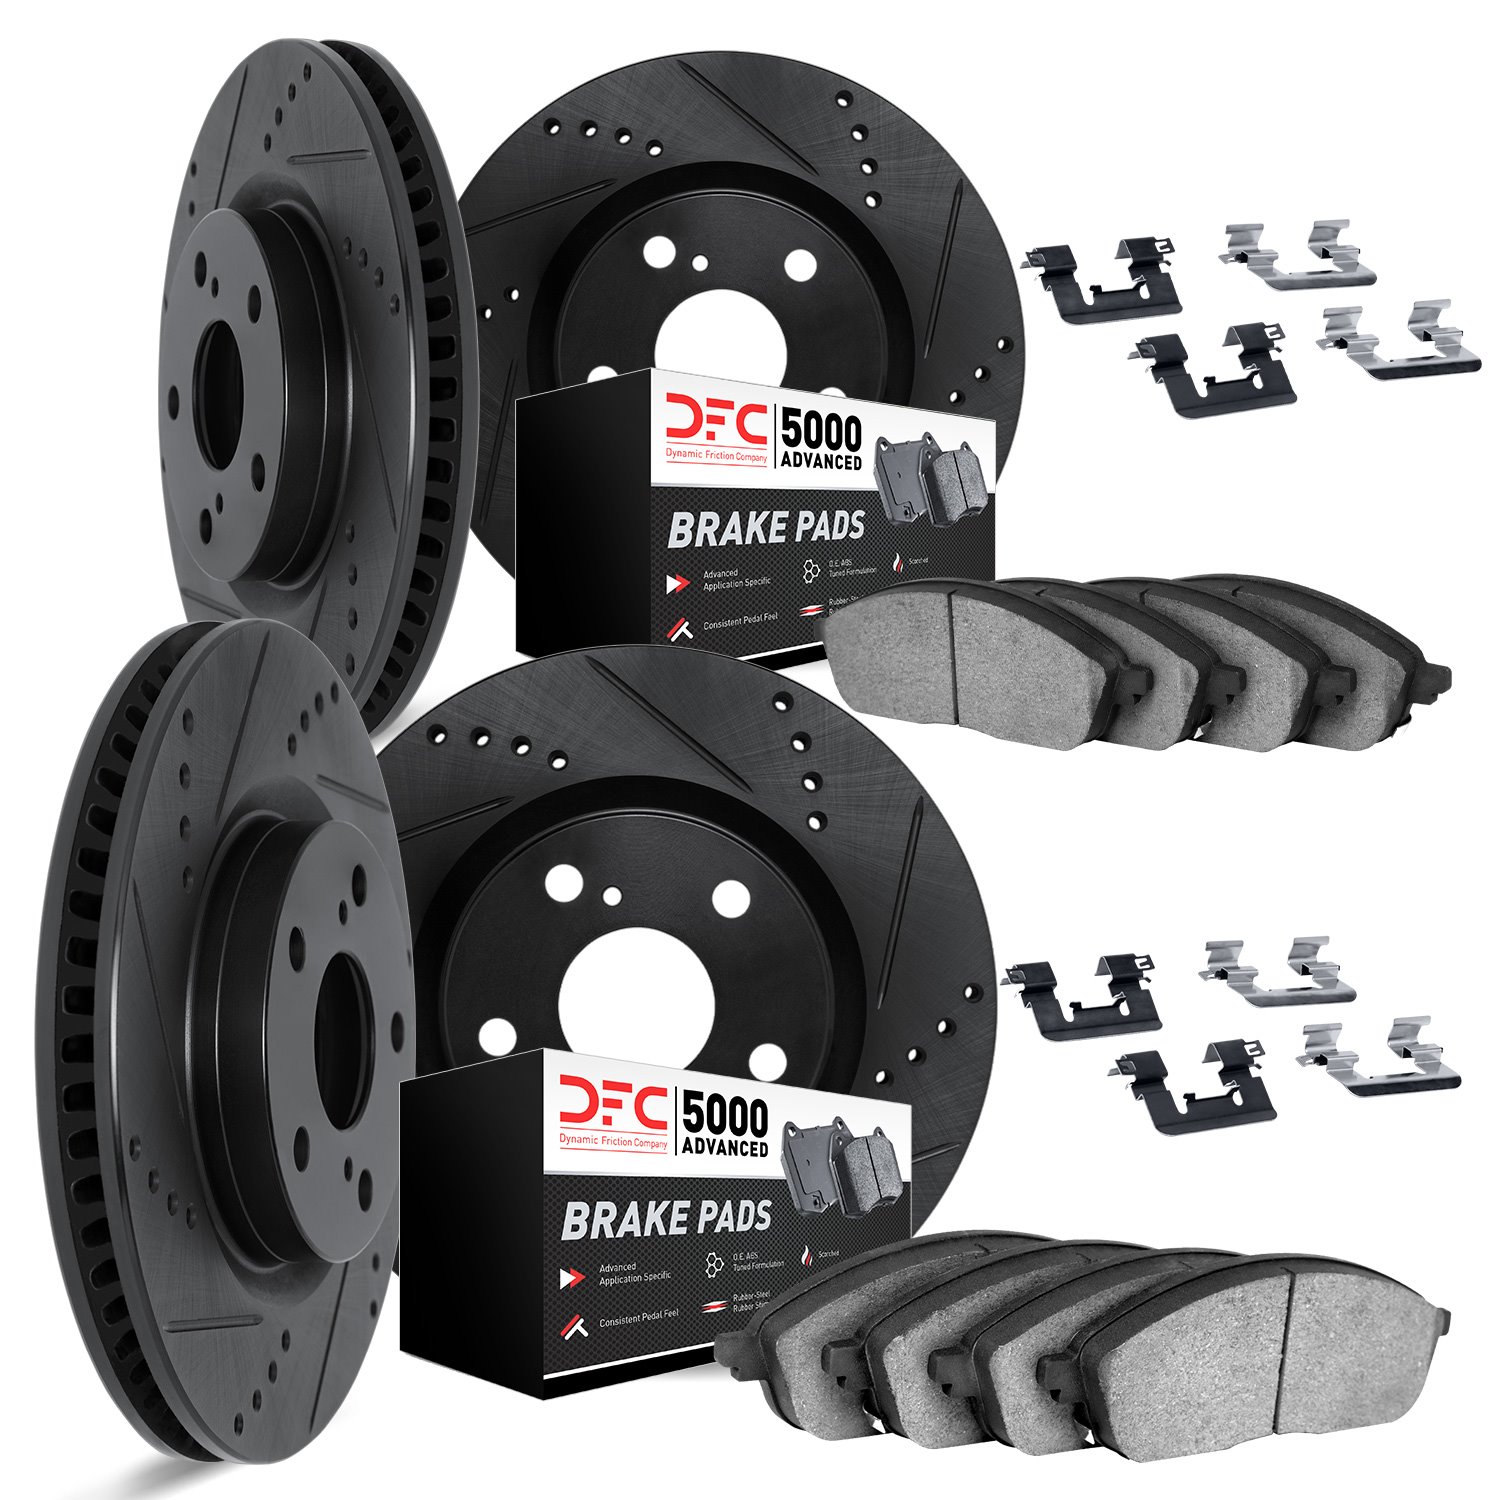 8514-63001 Drilled/Slotted Brake Rotors w/5000 Advanced Brake Pads Kit & Hardware [Black], 2019-2019 Mercedes-Benz, Position: Fr